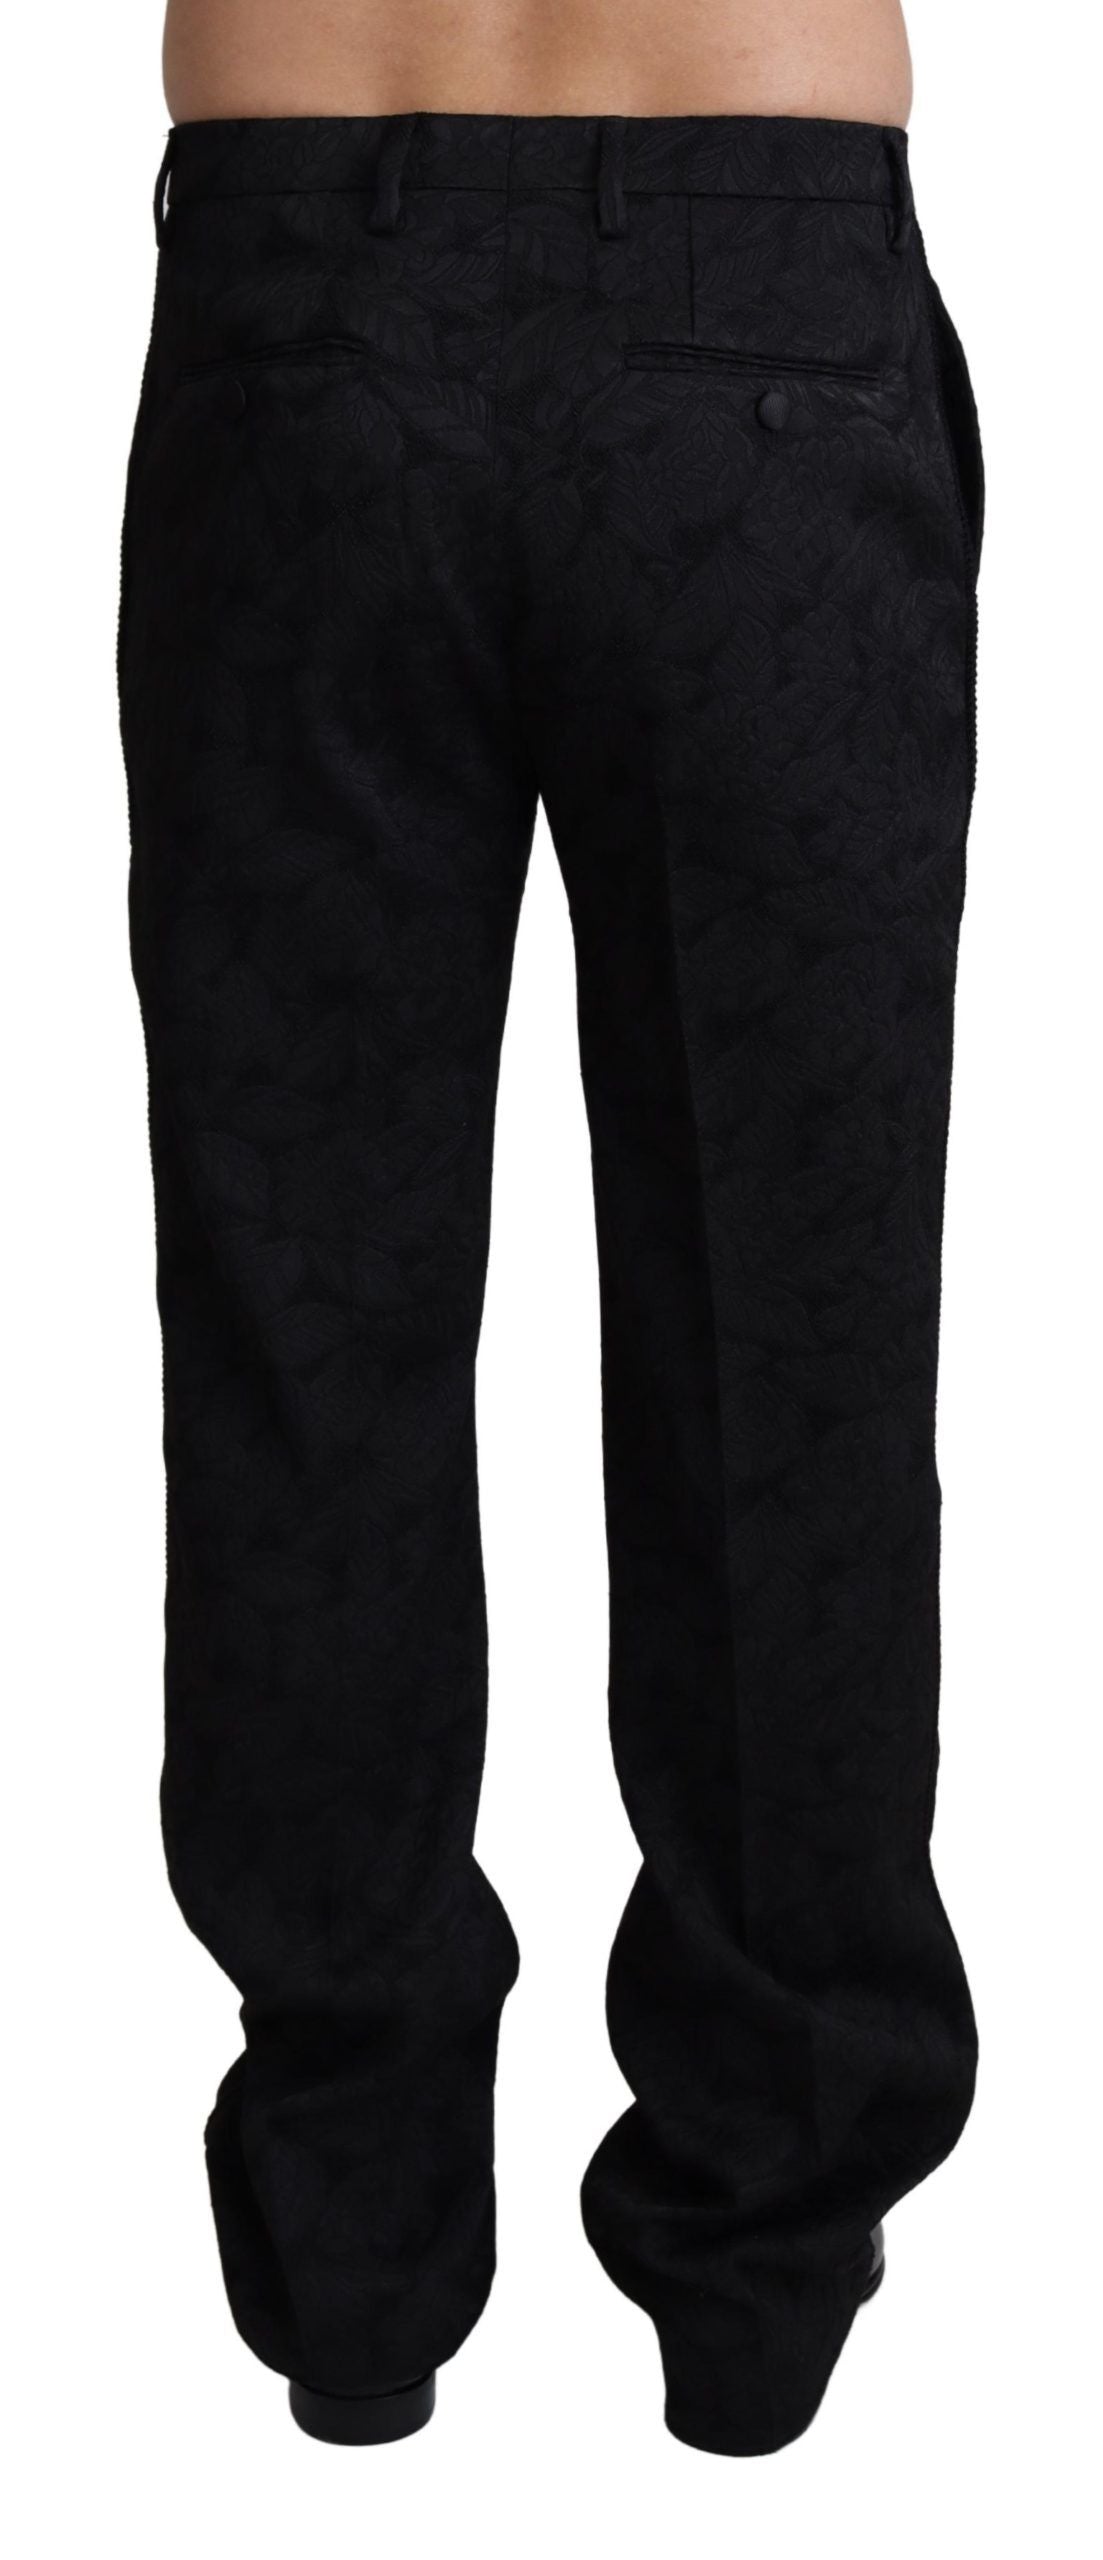 Dolce & Gabbana Elegant Black Dress Pants for Sophisticated Style